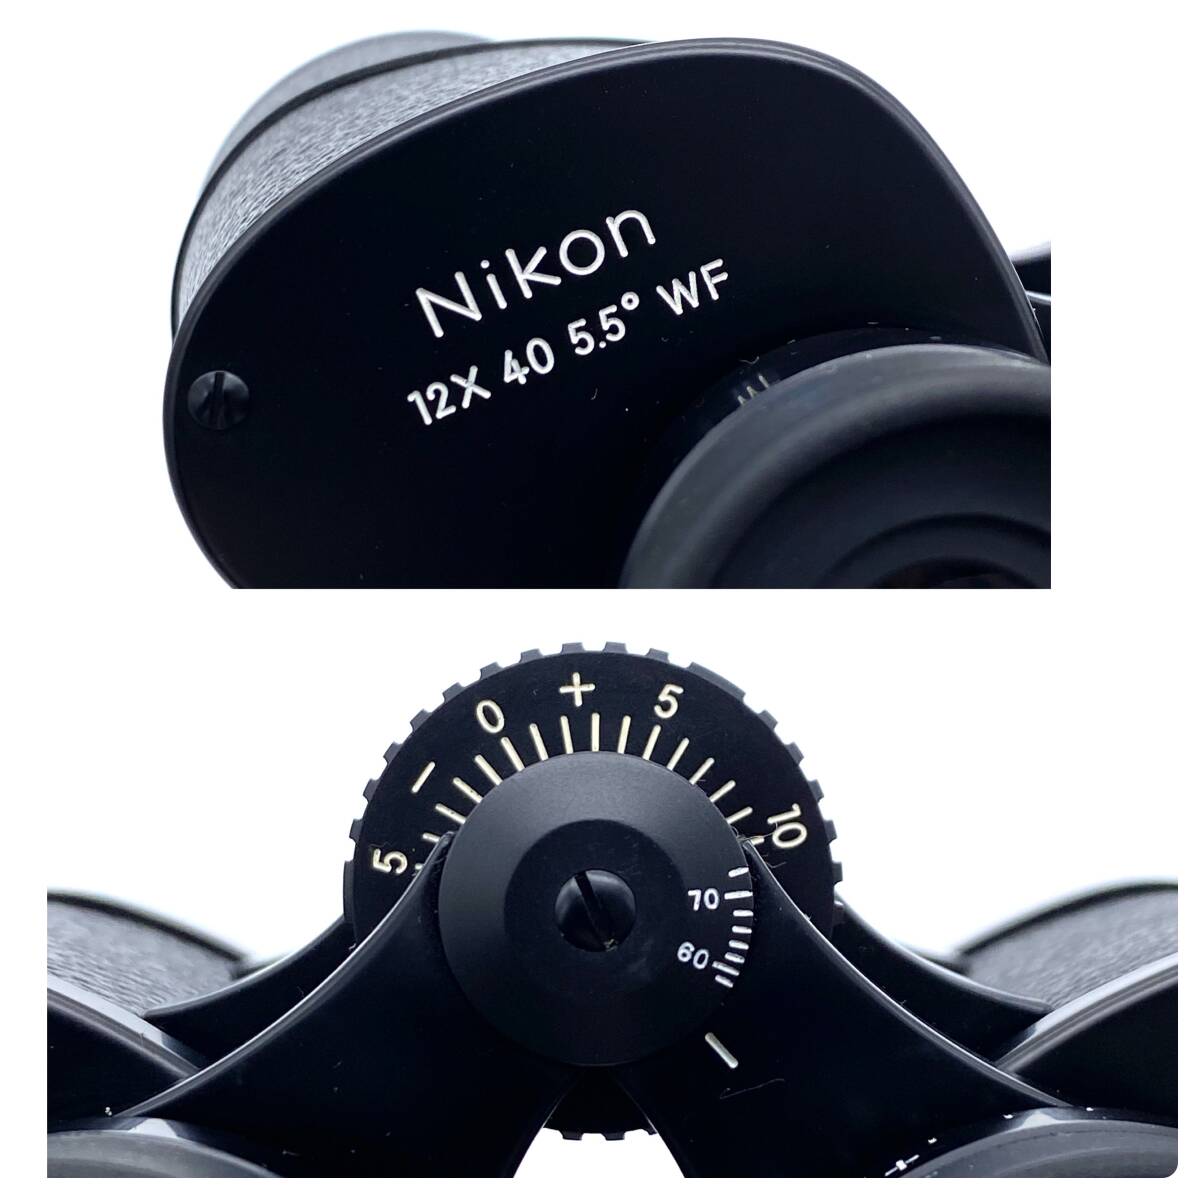 AY0953#[ operation not yet verification ]NIKON Nikon binoculars 12×40 5.5° WF 692767 soft case instructions written guarantee Japan optics industry black 